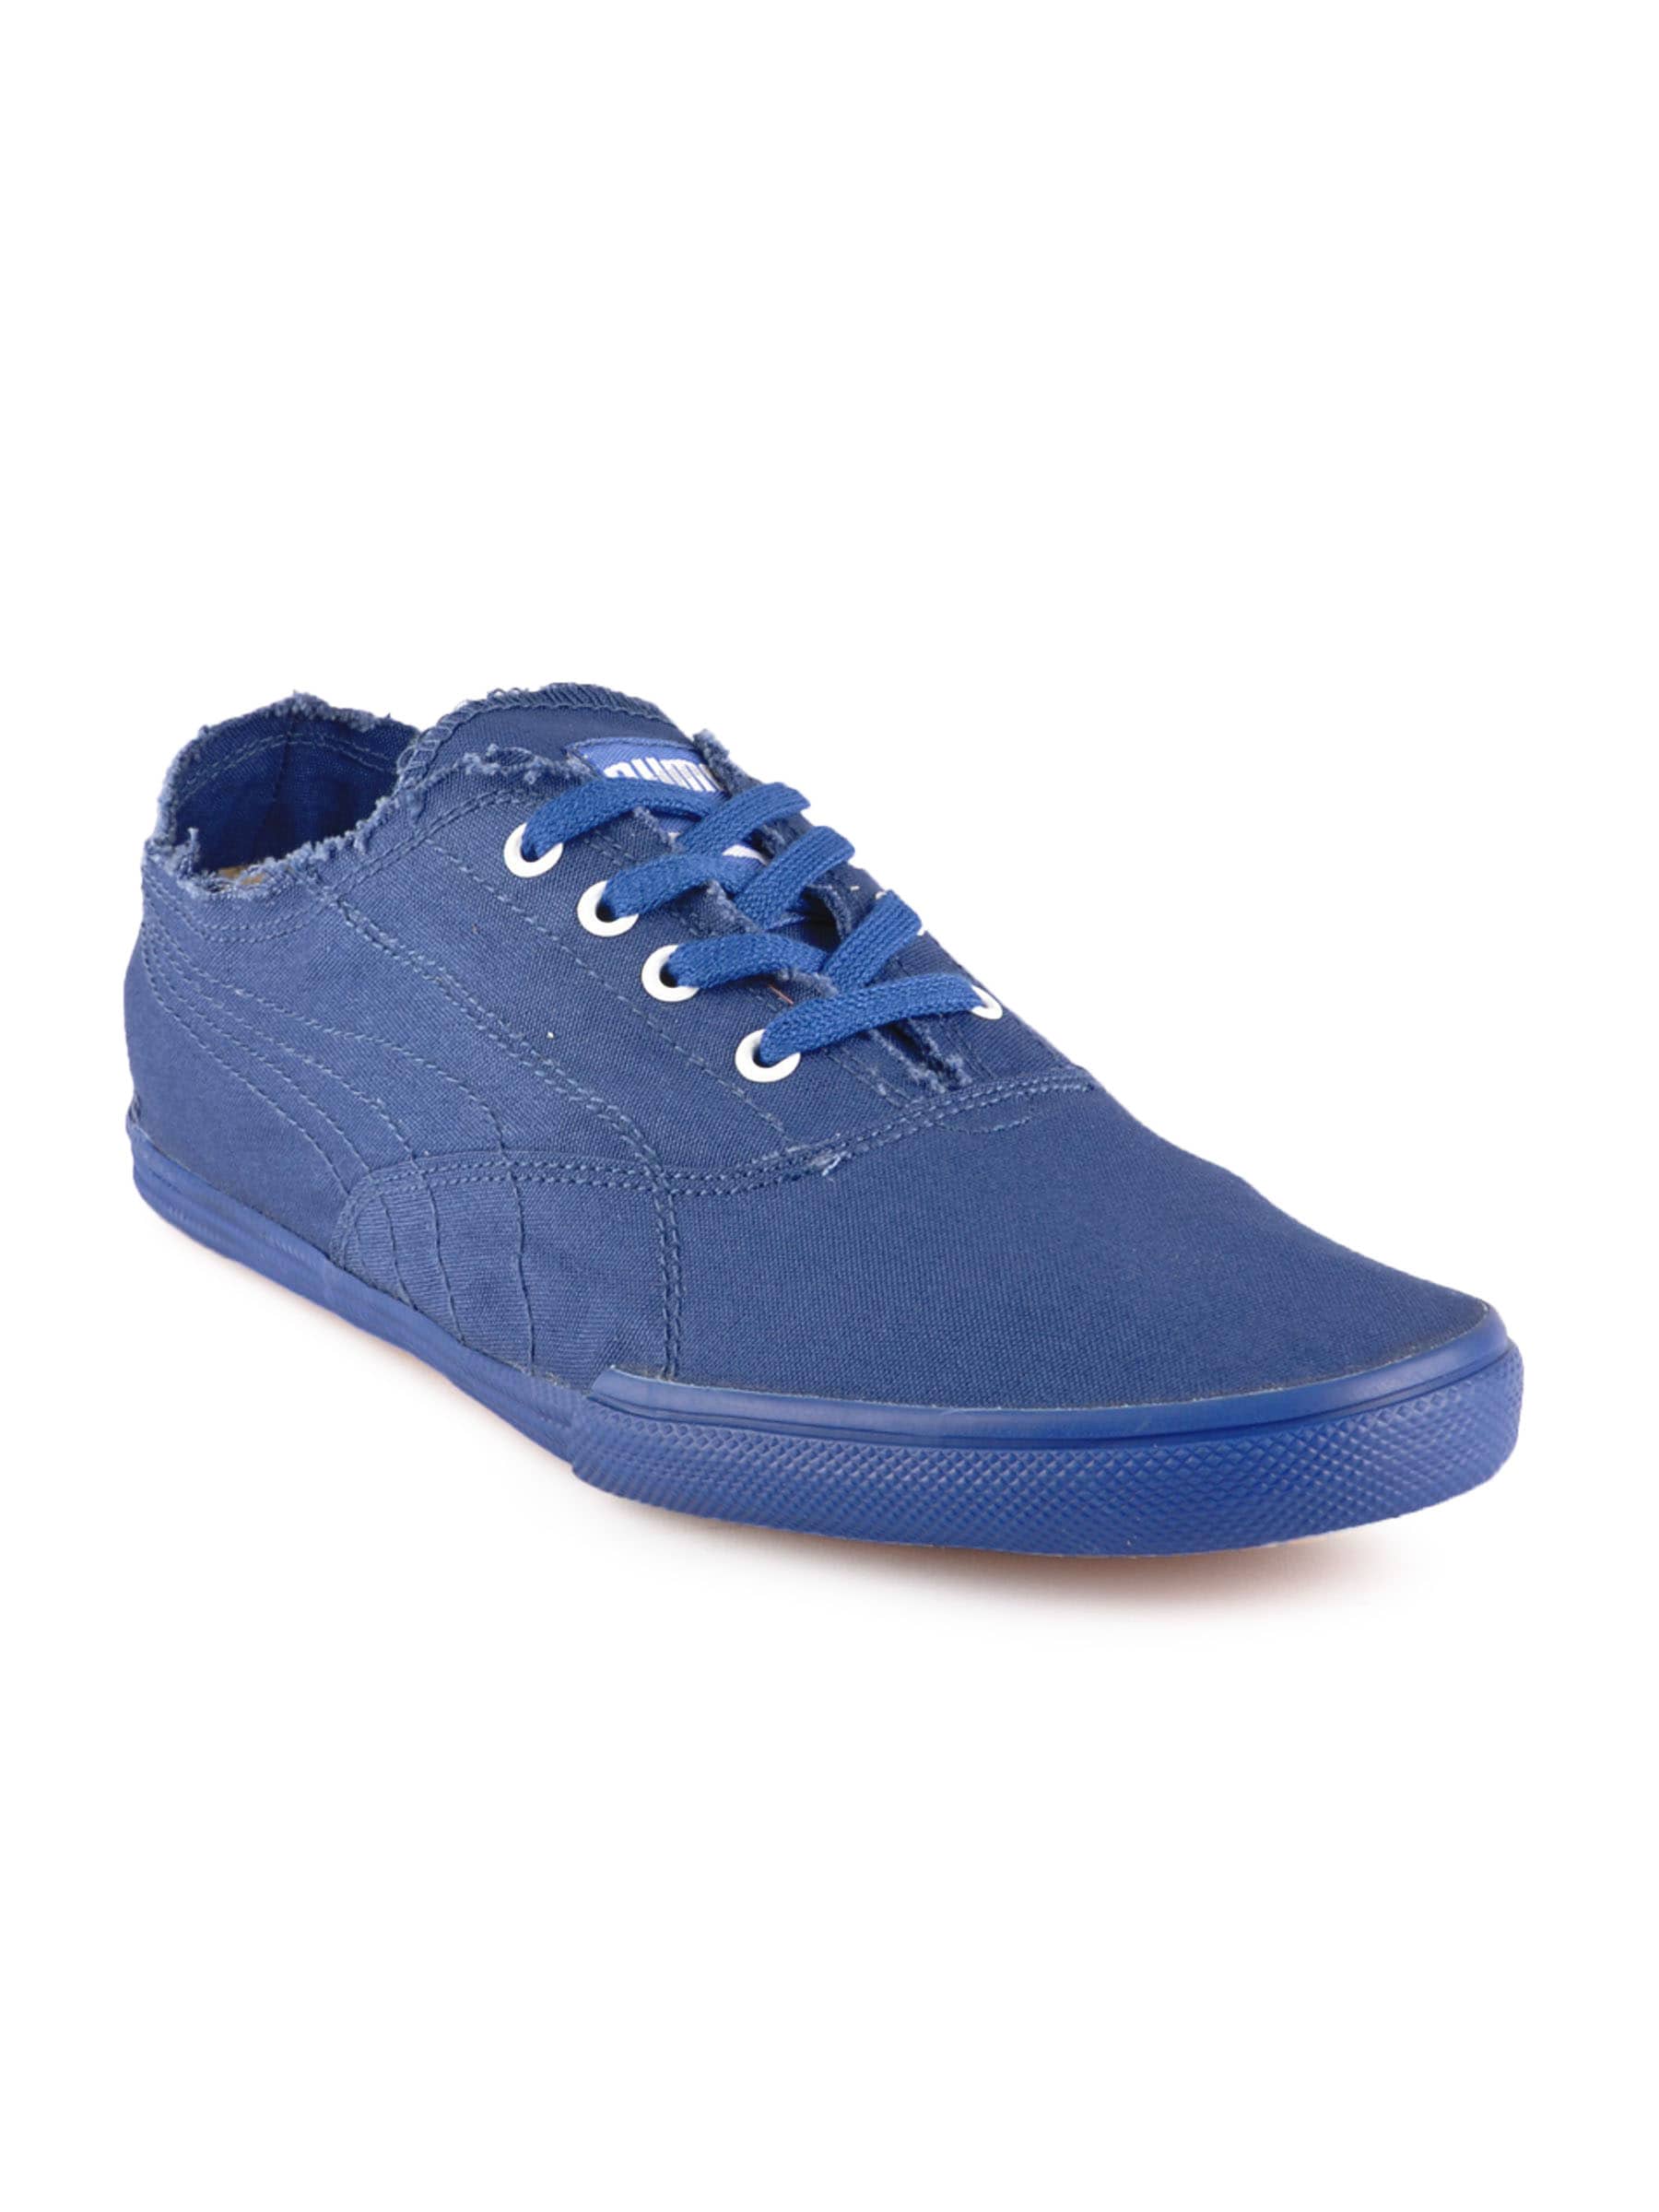 Puma Men Eco ortholite Blue Casual Shoes